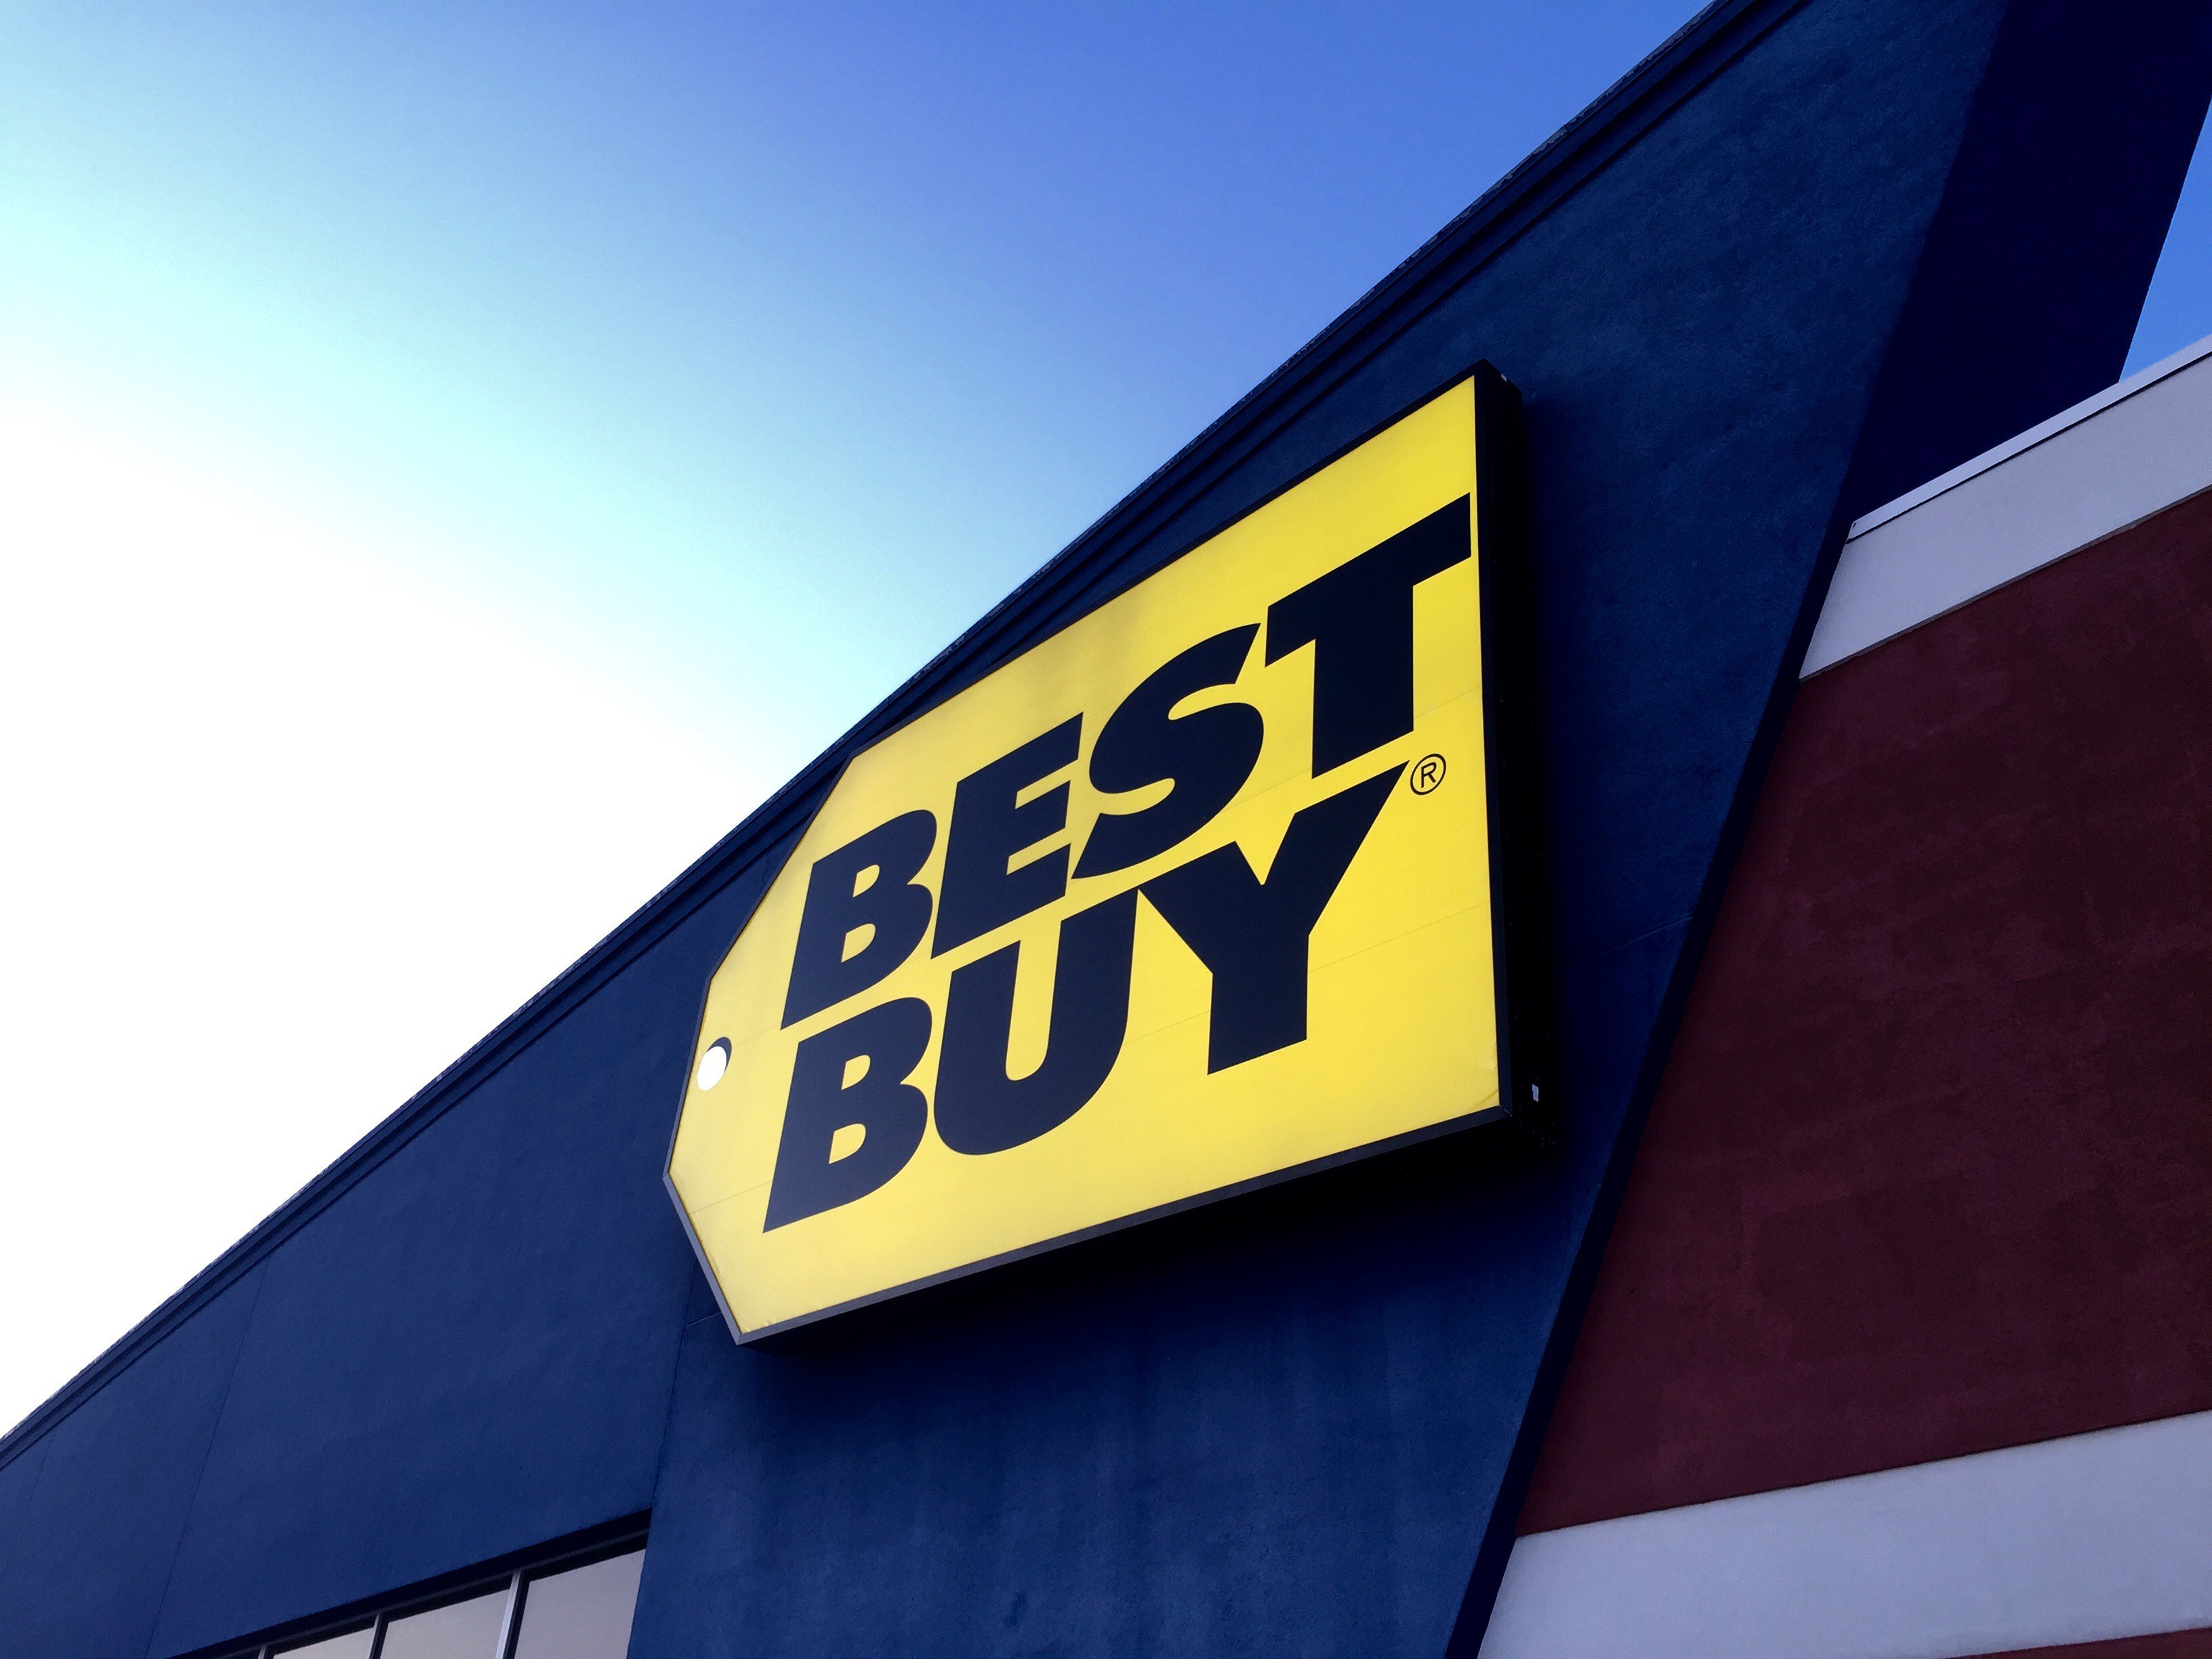 2018 Best Buy Black Friday Ad Revealed: Deals Start Now